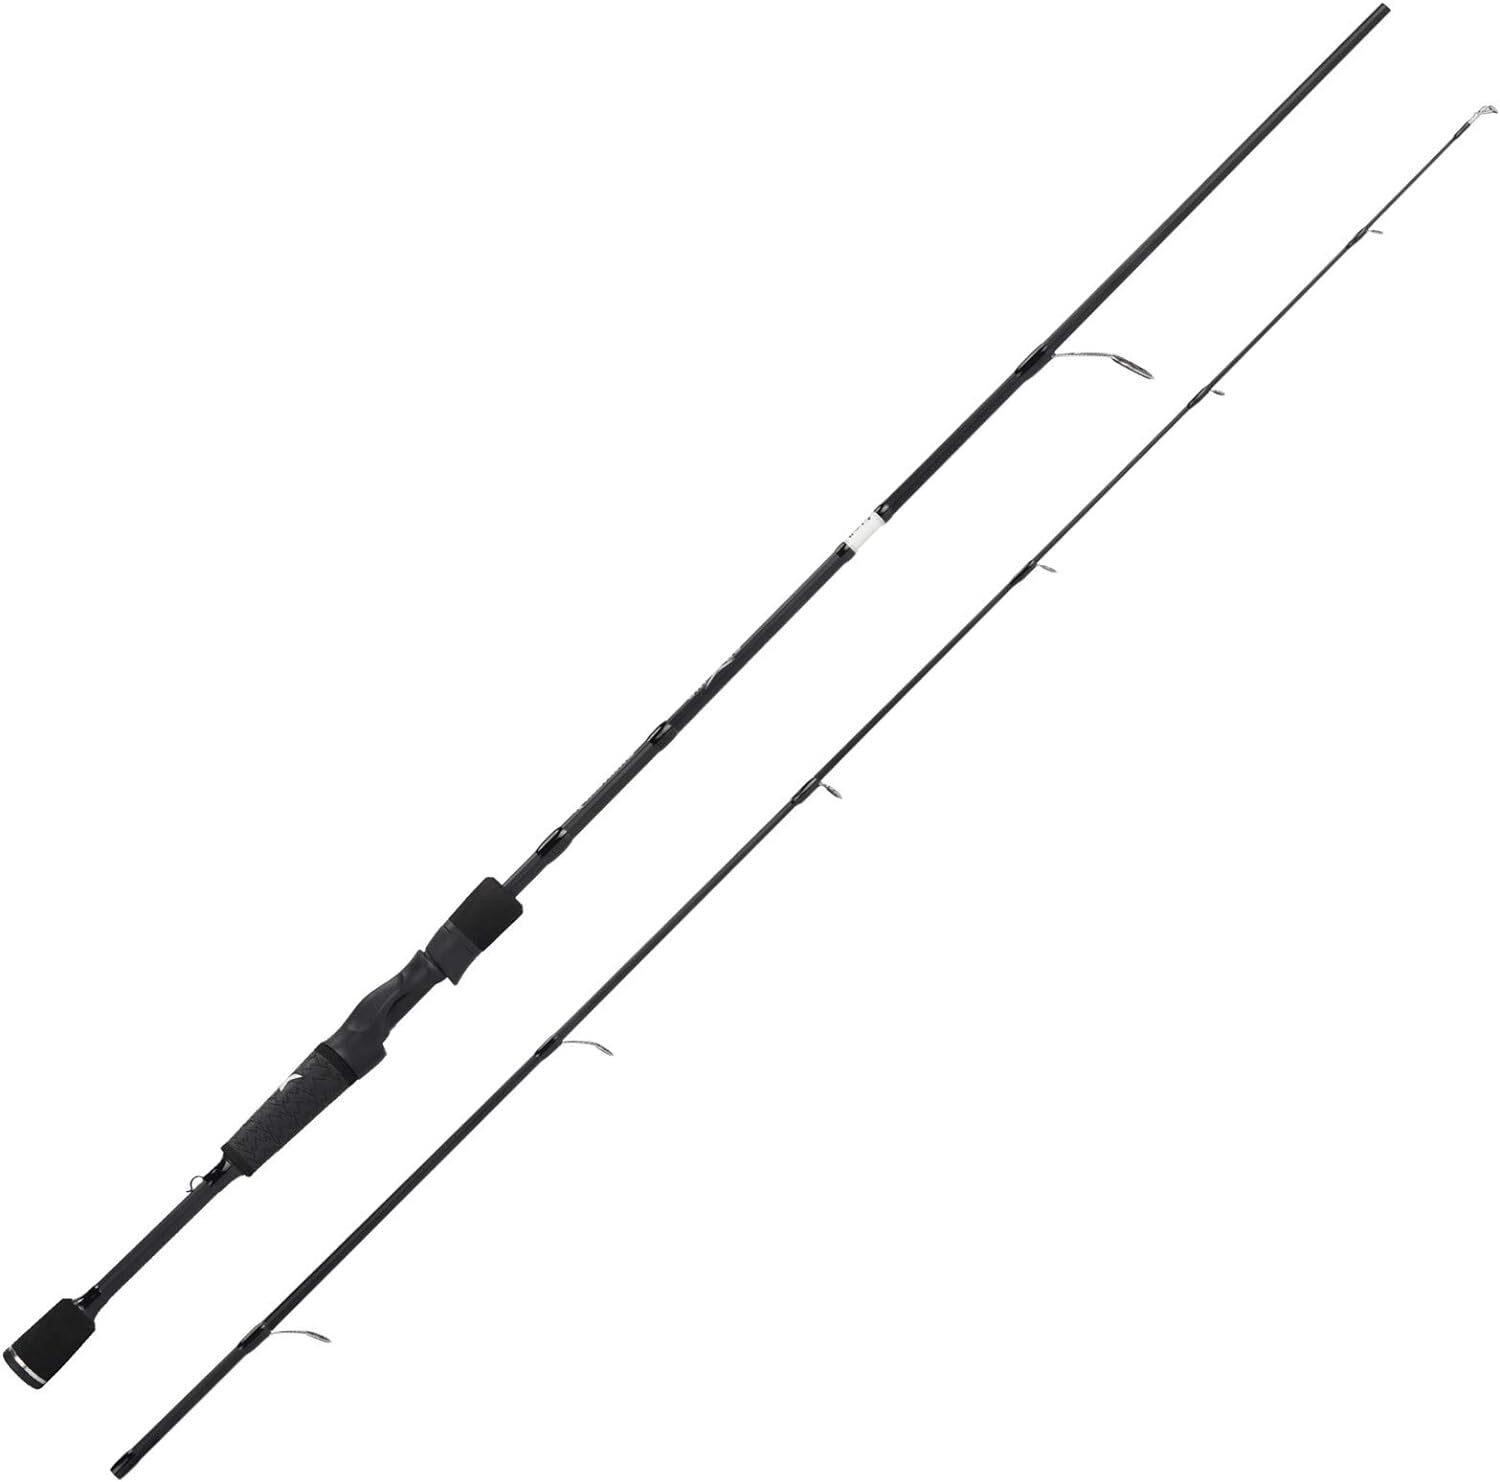 KastKing Crixus Rod, IM6, 6'6 M Light, 2pcs